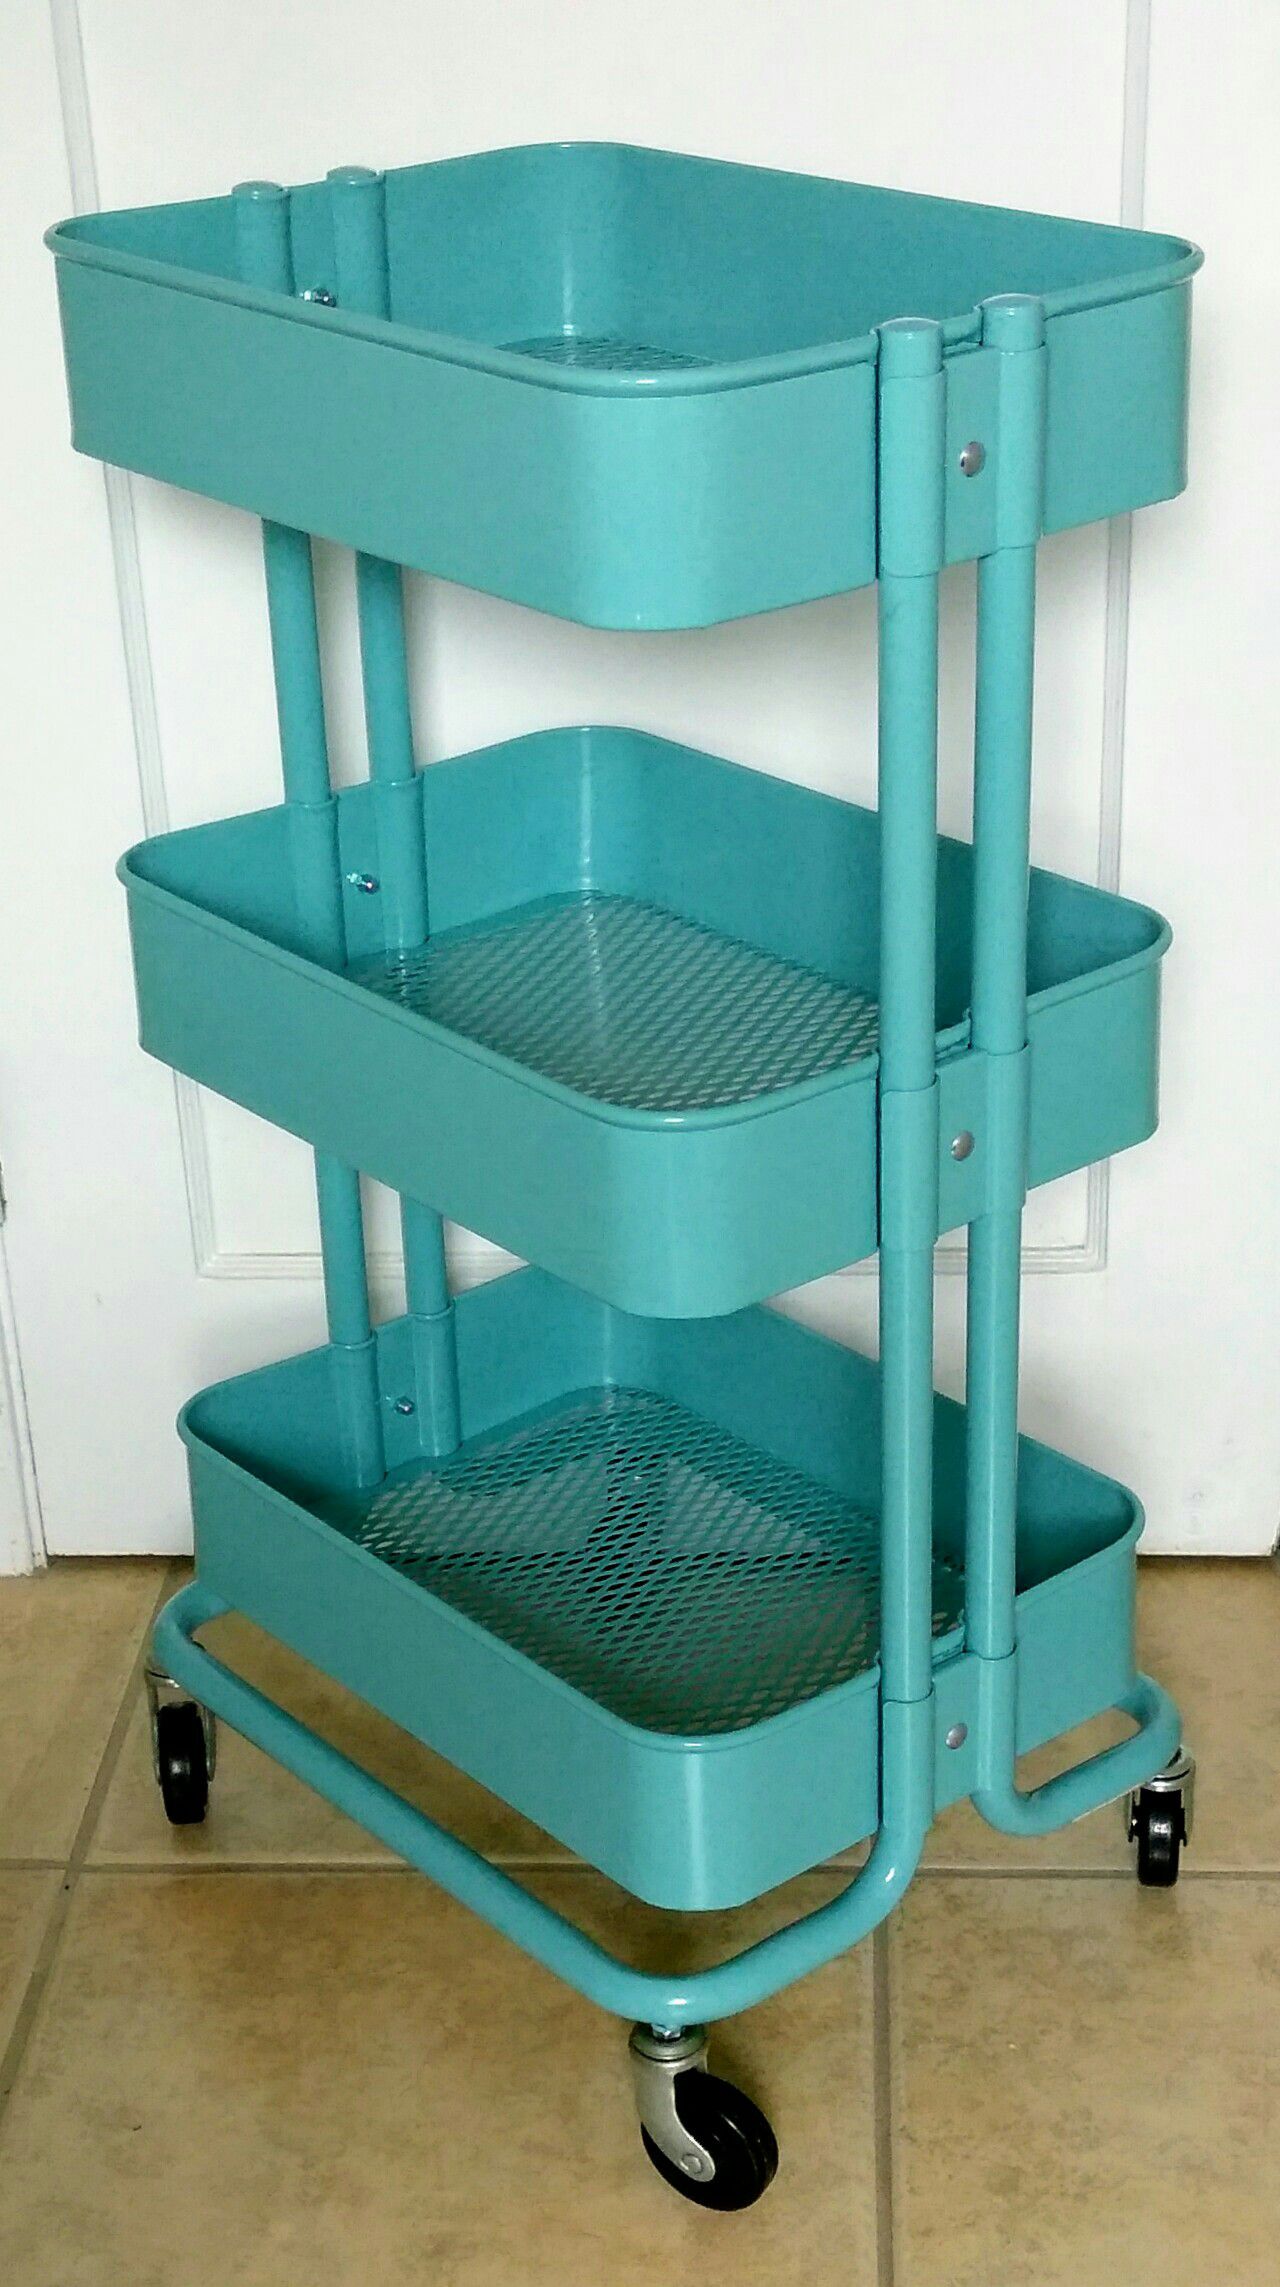 Ikea RASKOG 3-tier metal mesh utility trolley rolling cart storage organizer with wheels